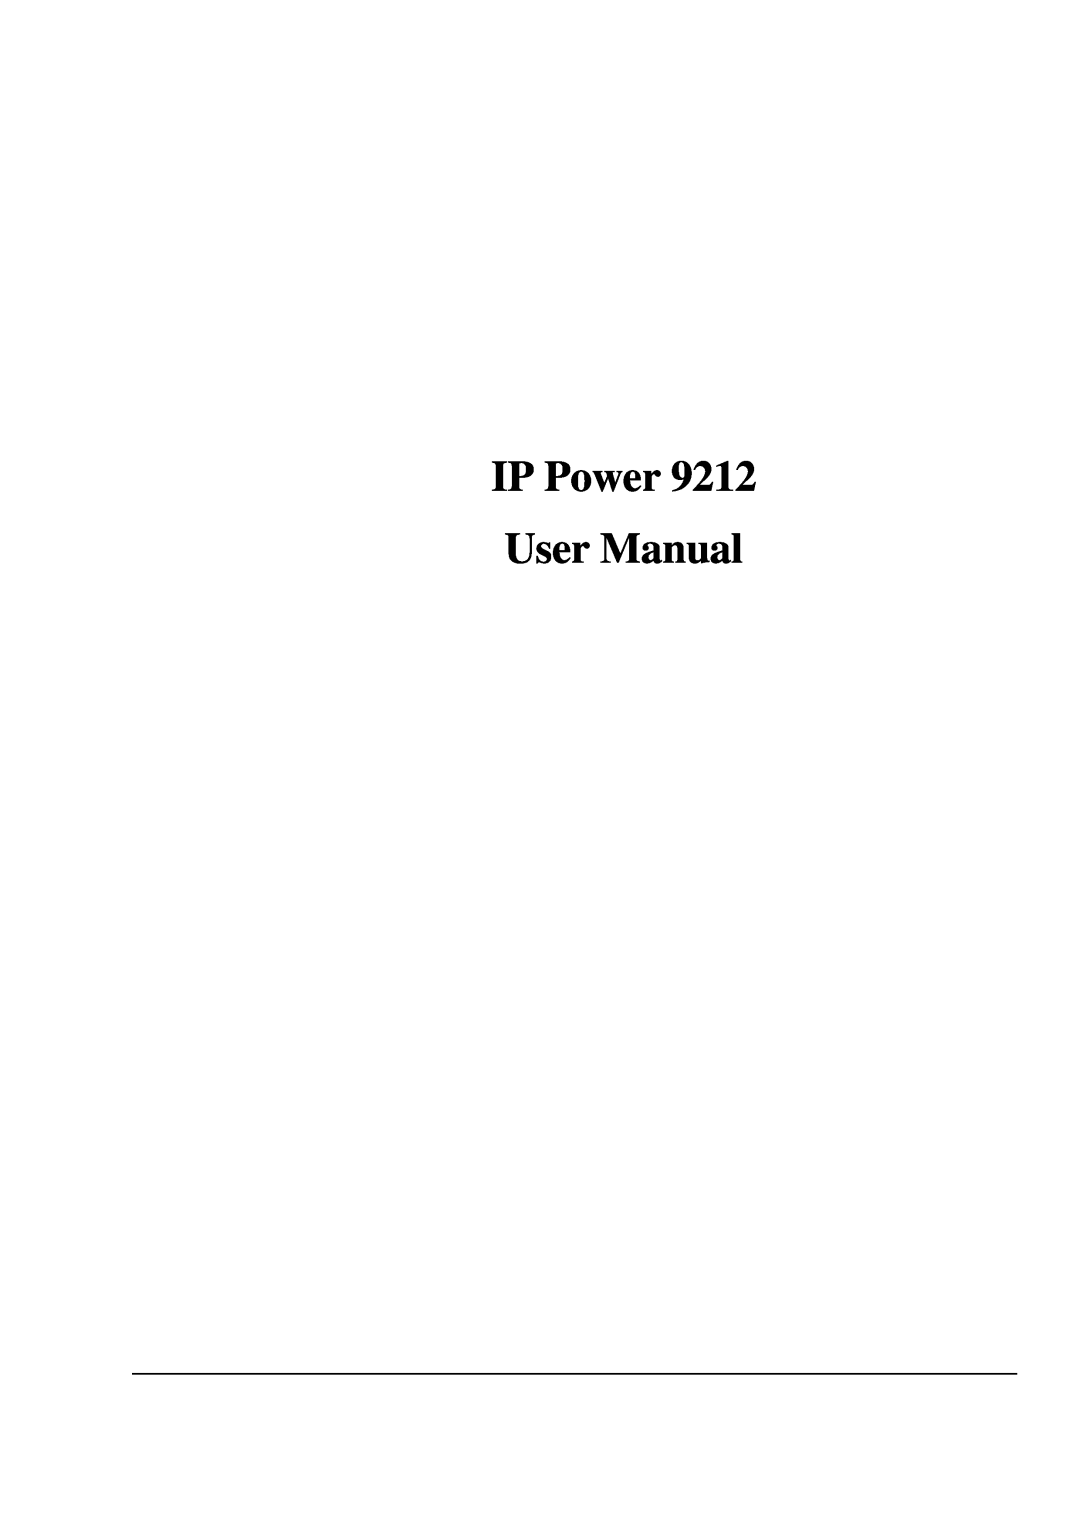 New Media Technology 9212 manual IP Power, User Manual 